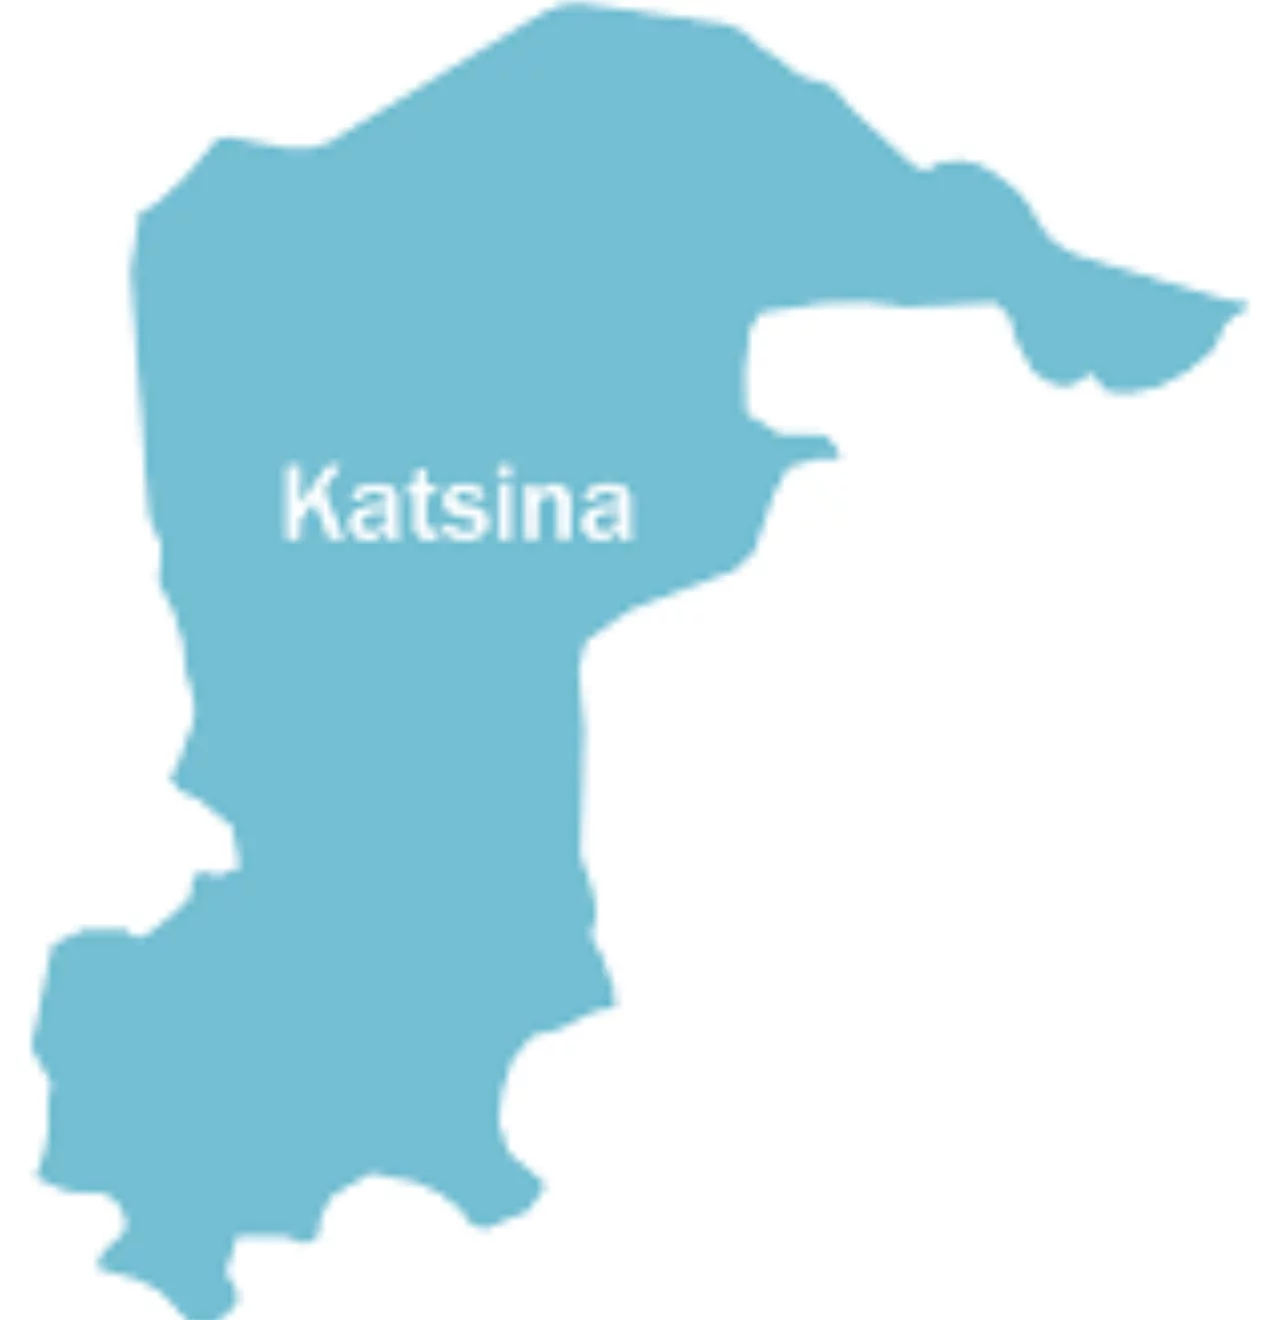 Mob lynched customs officer in Katsina